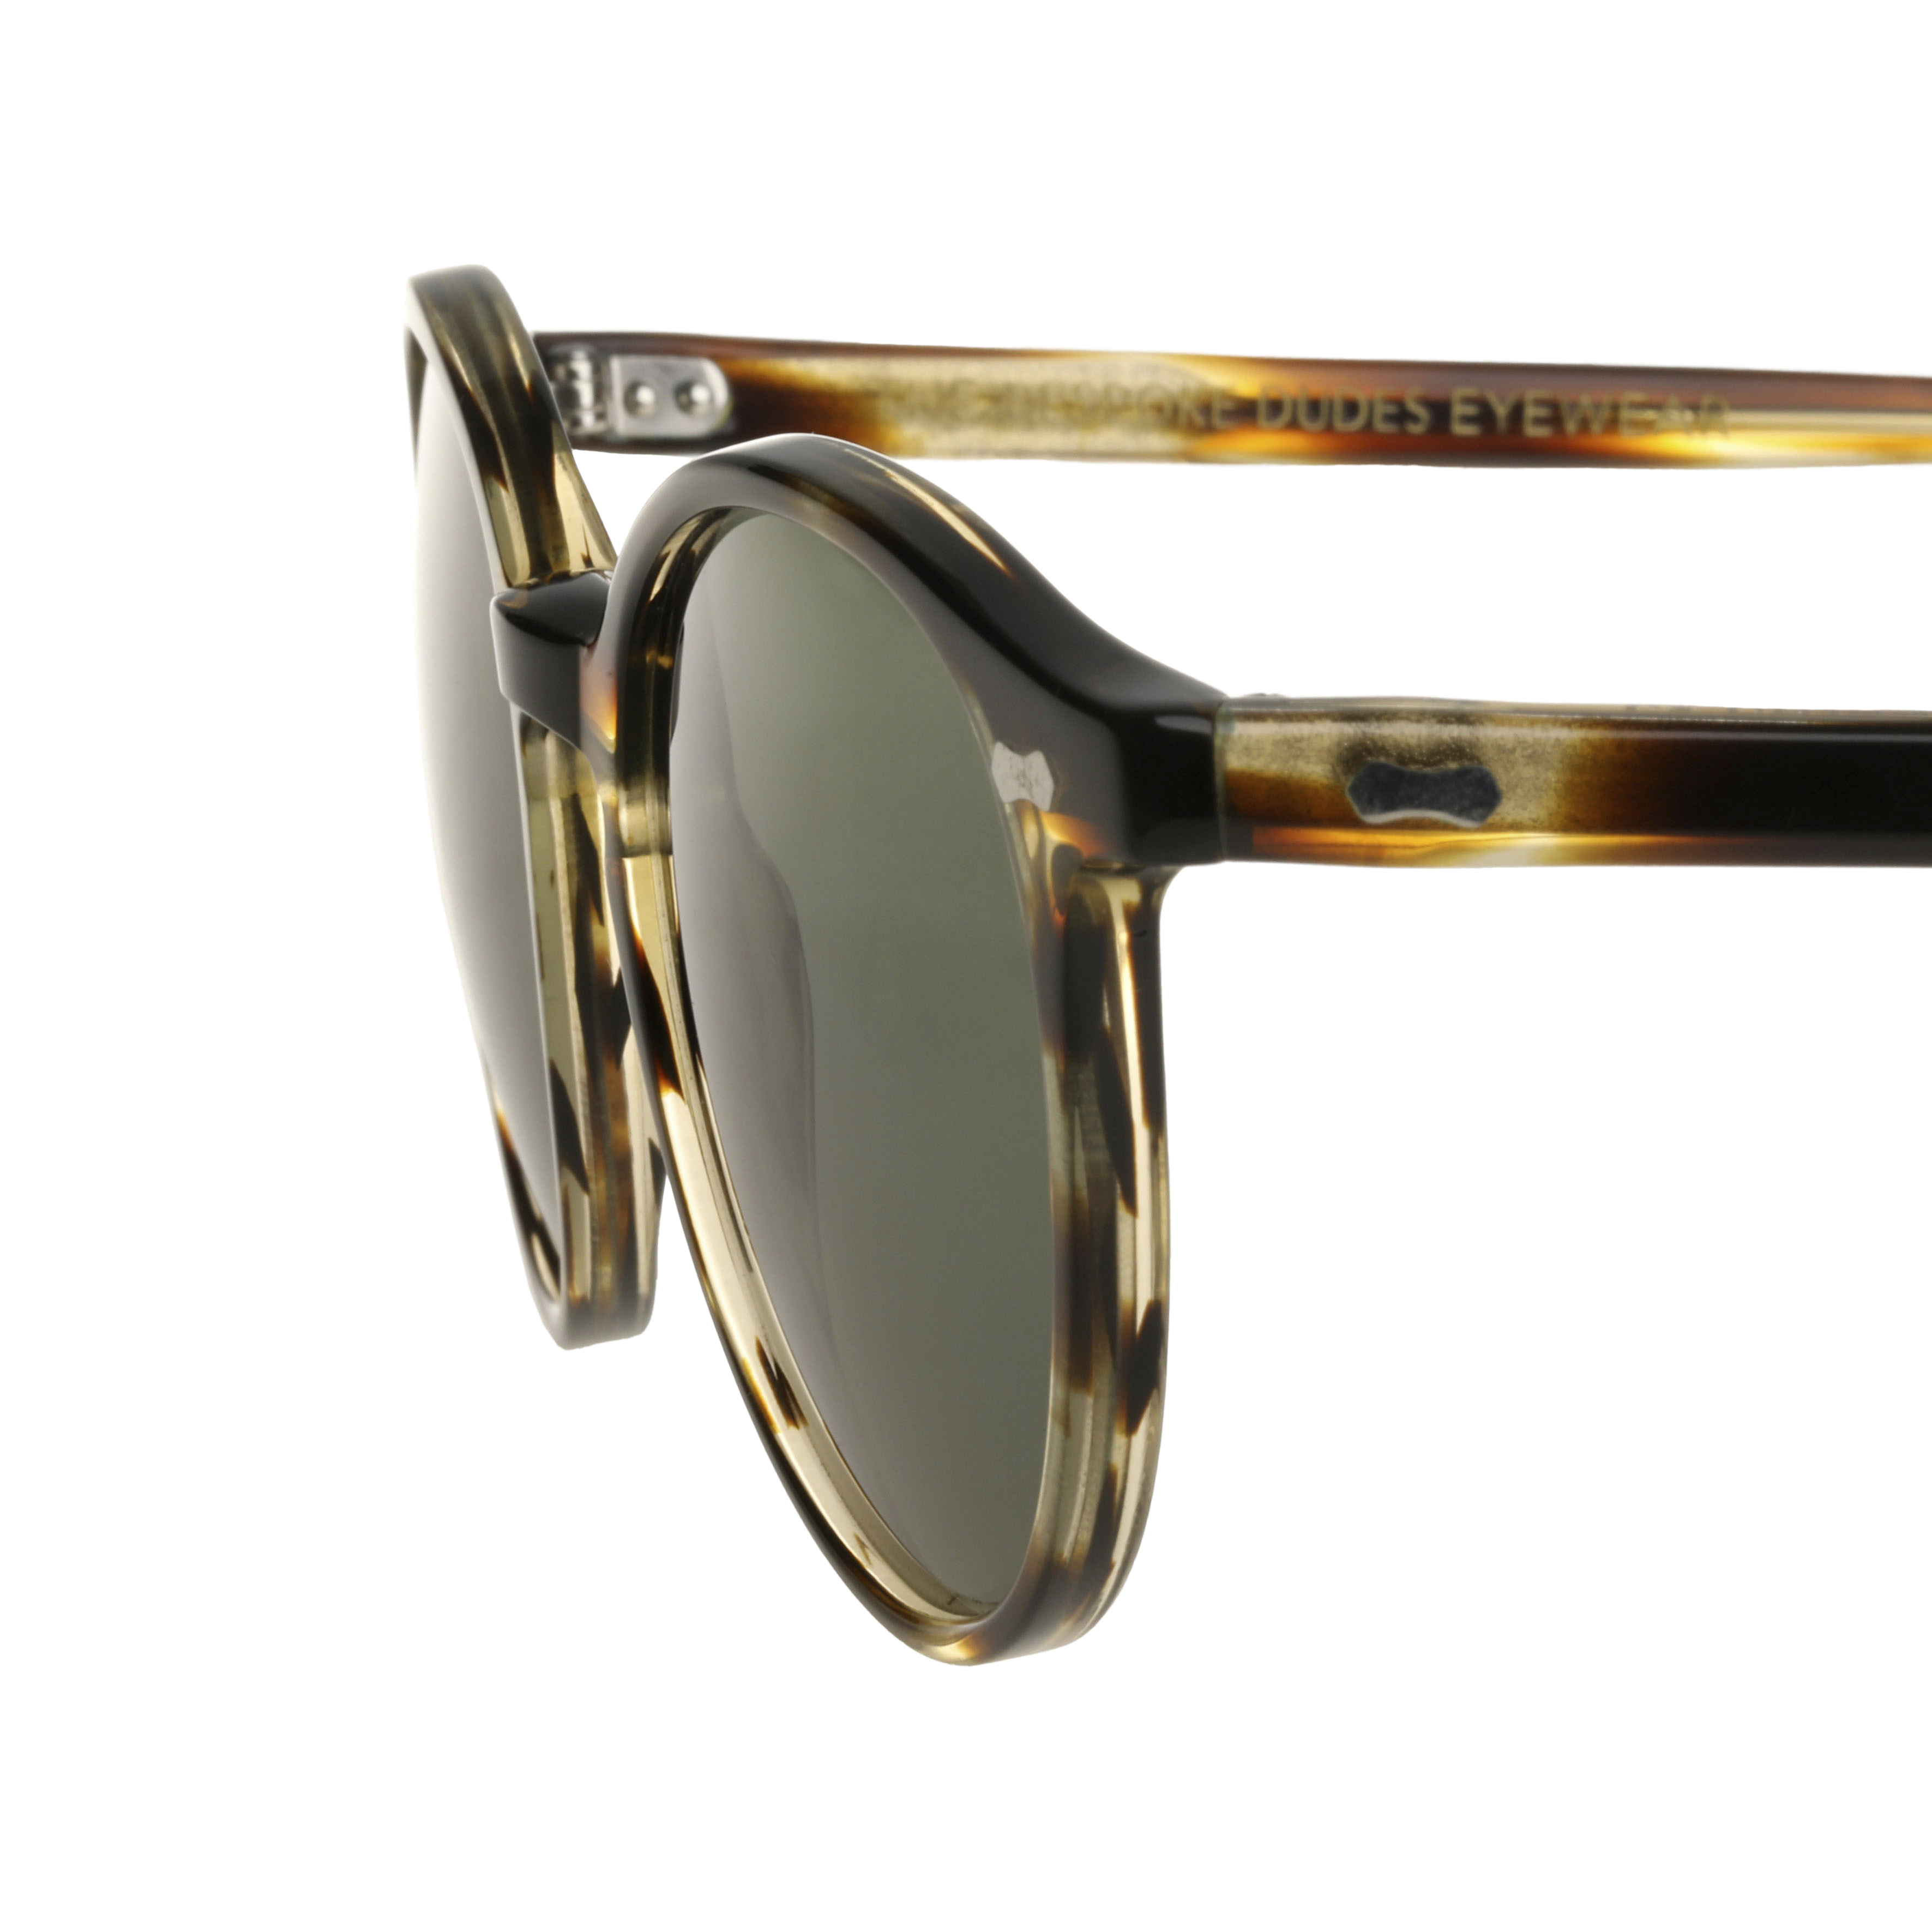 High-quality Cran Light Havana Bottle Green Lenses sunglasses with tortoise frames in a modern panto shape from The Bespoke Dudes.